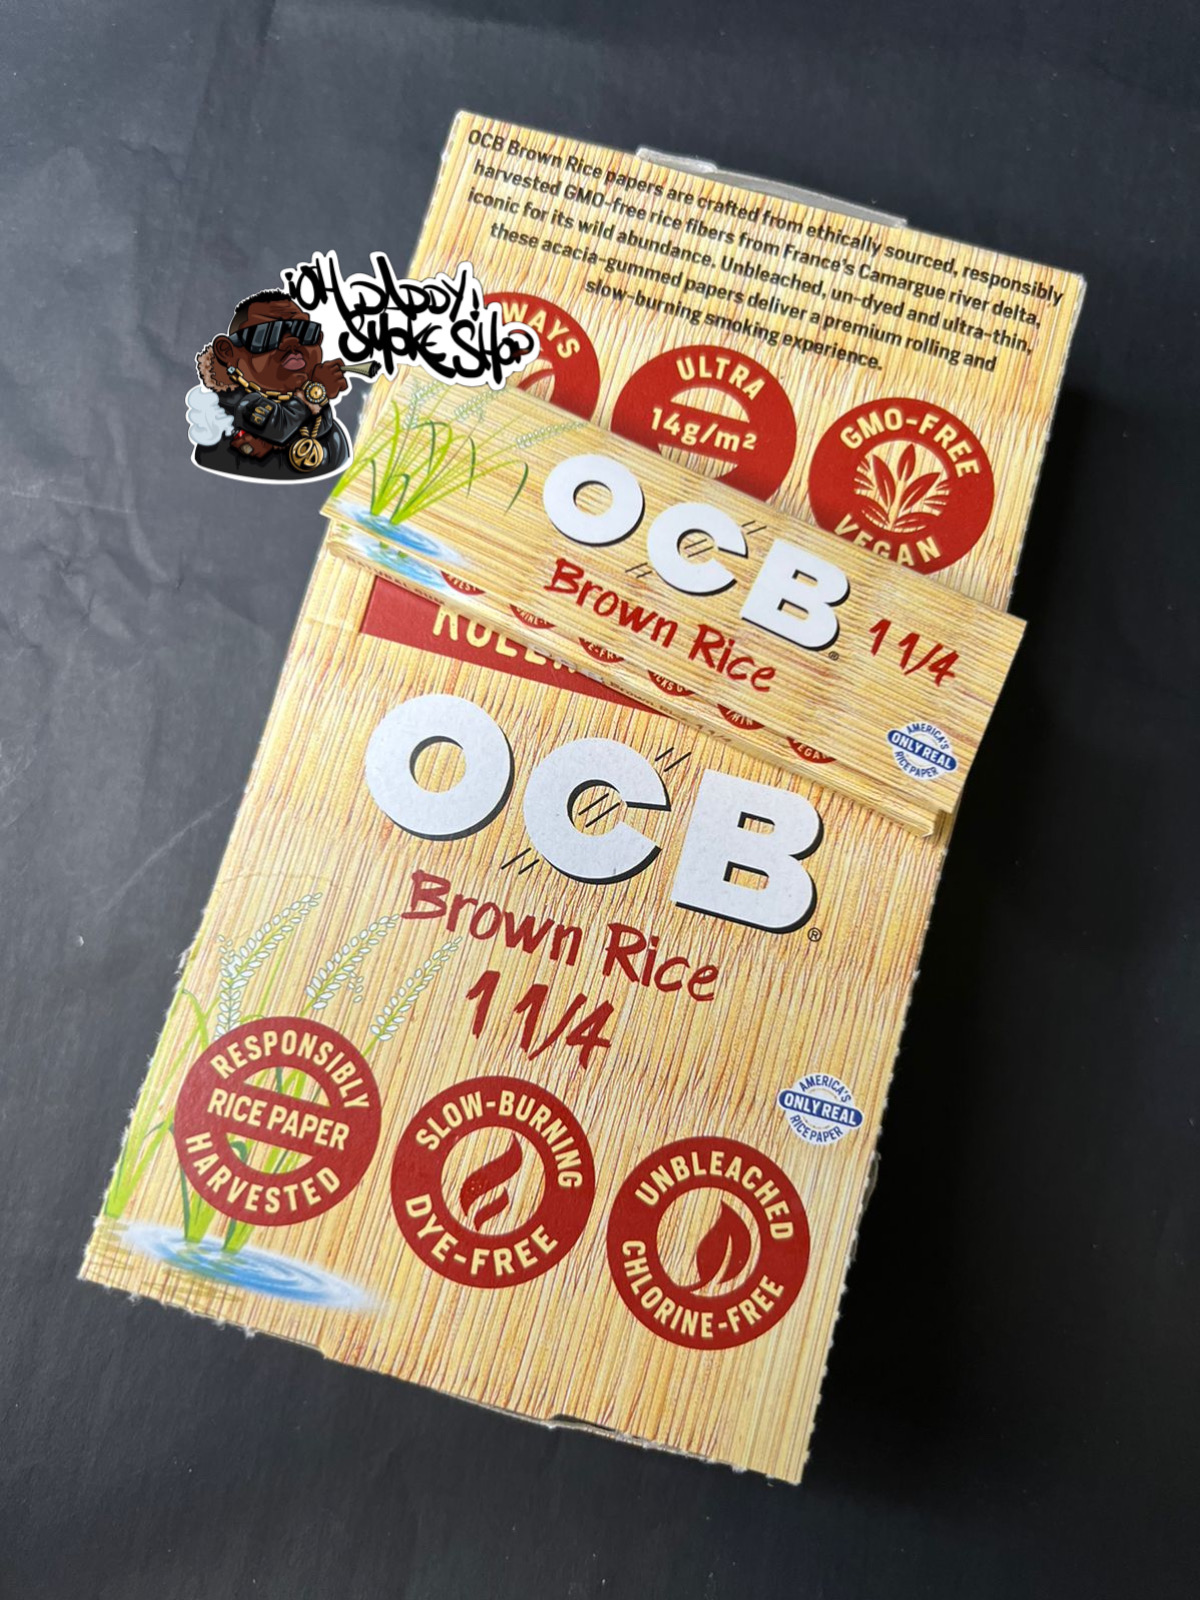 OCB Brown rice 1 1/4